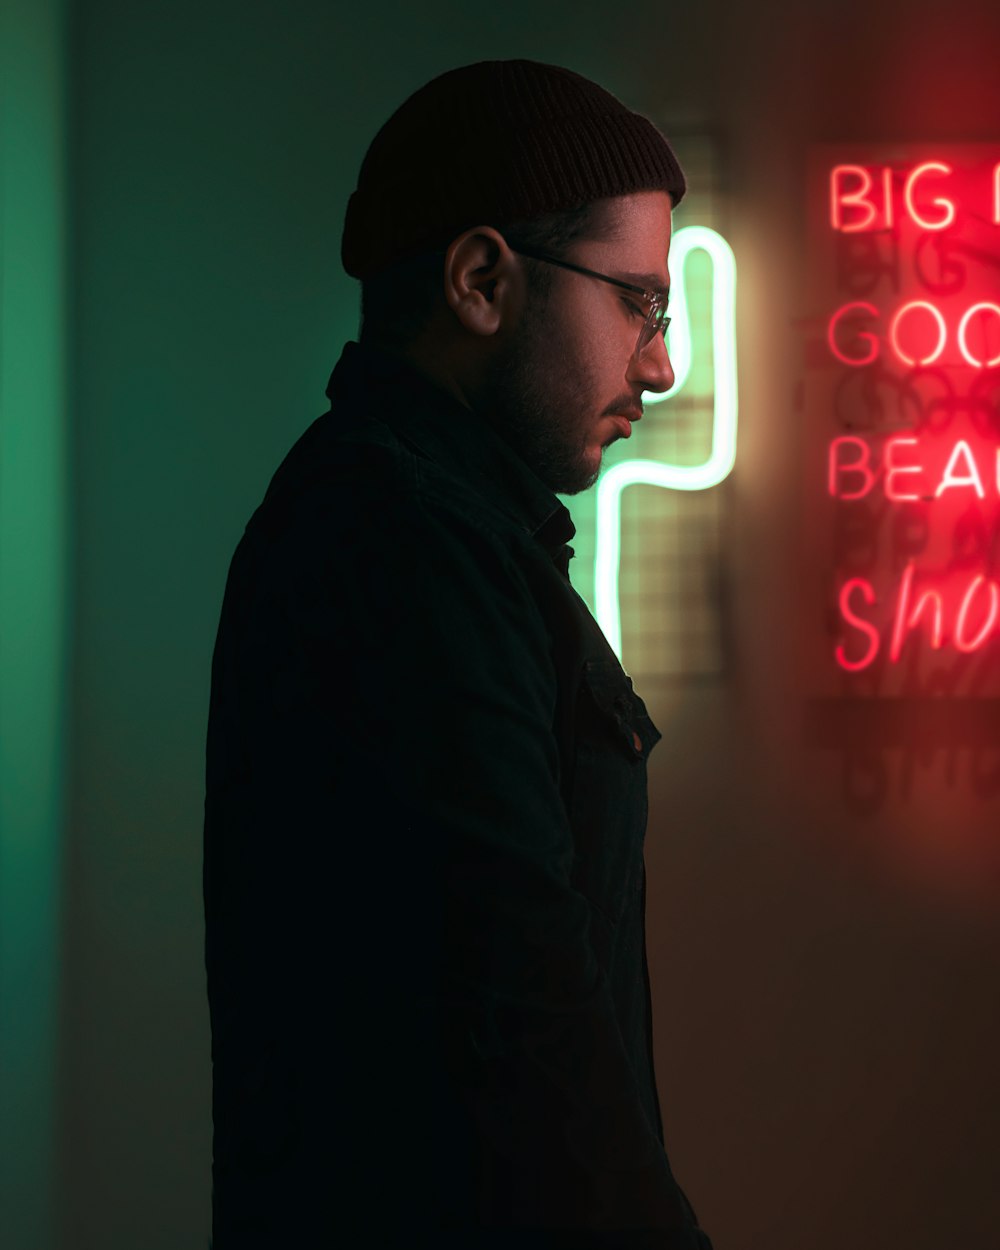 man in black jacket standing near neon sign